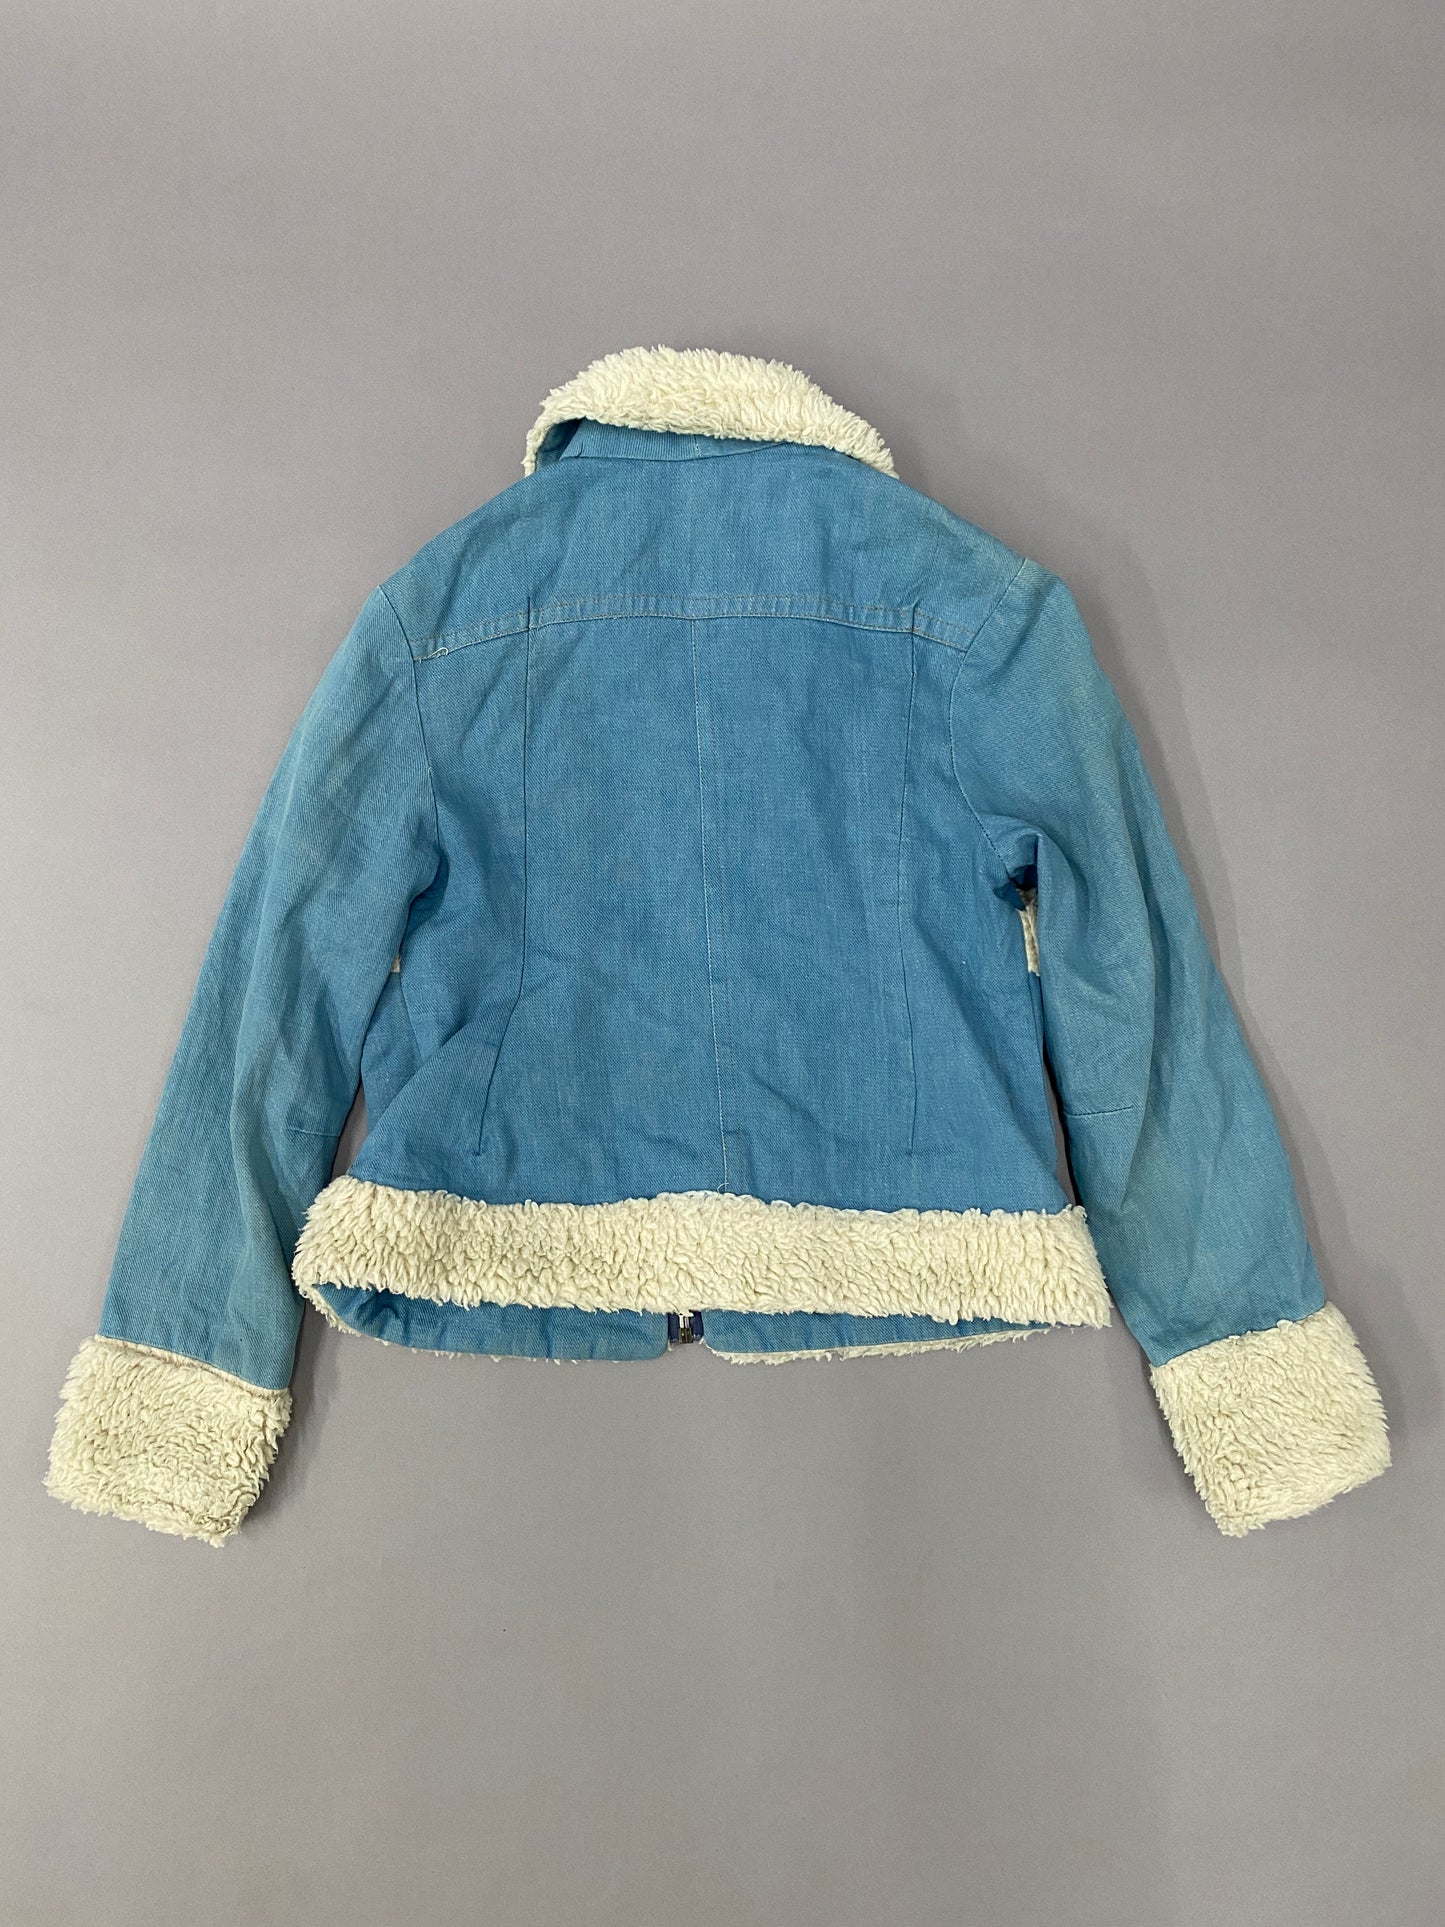 80s Furry Jacket